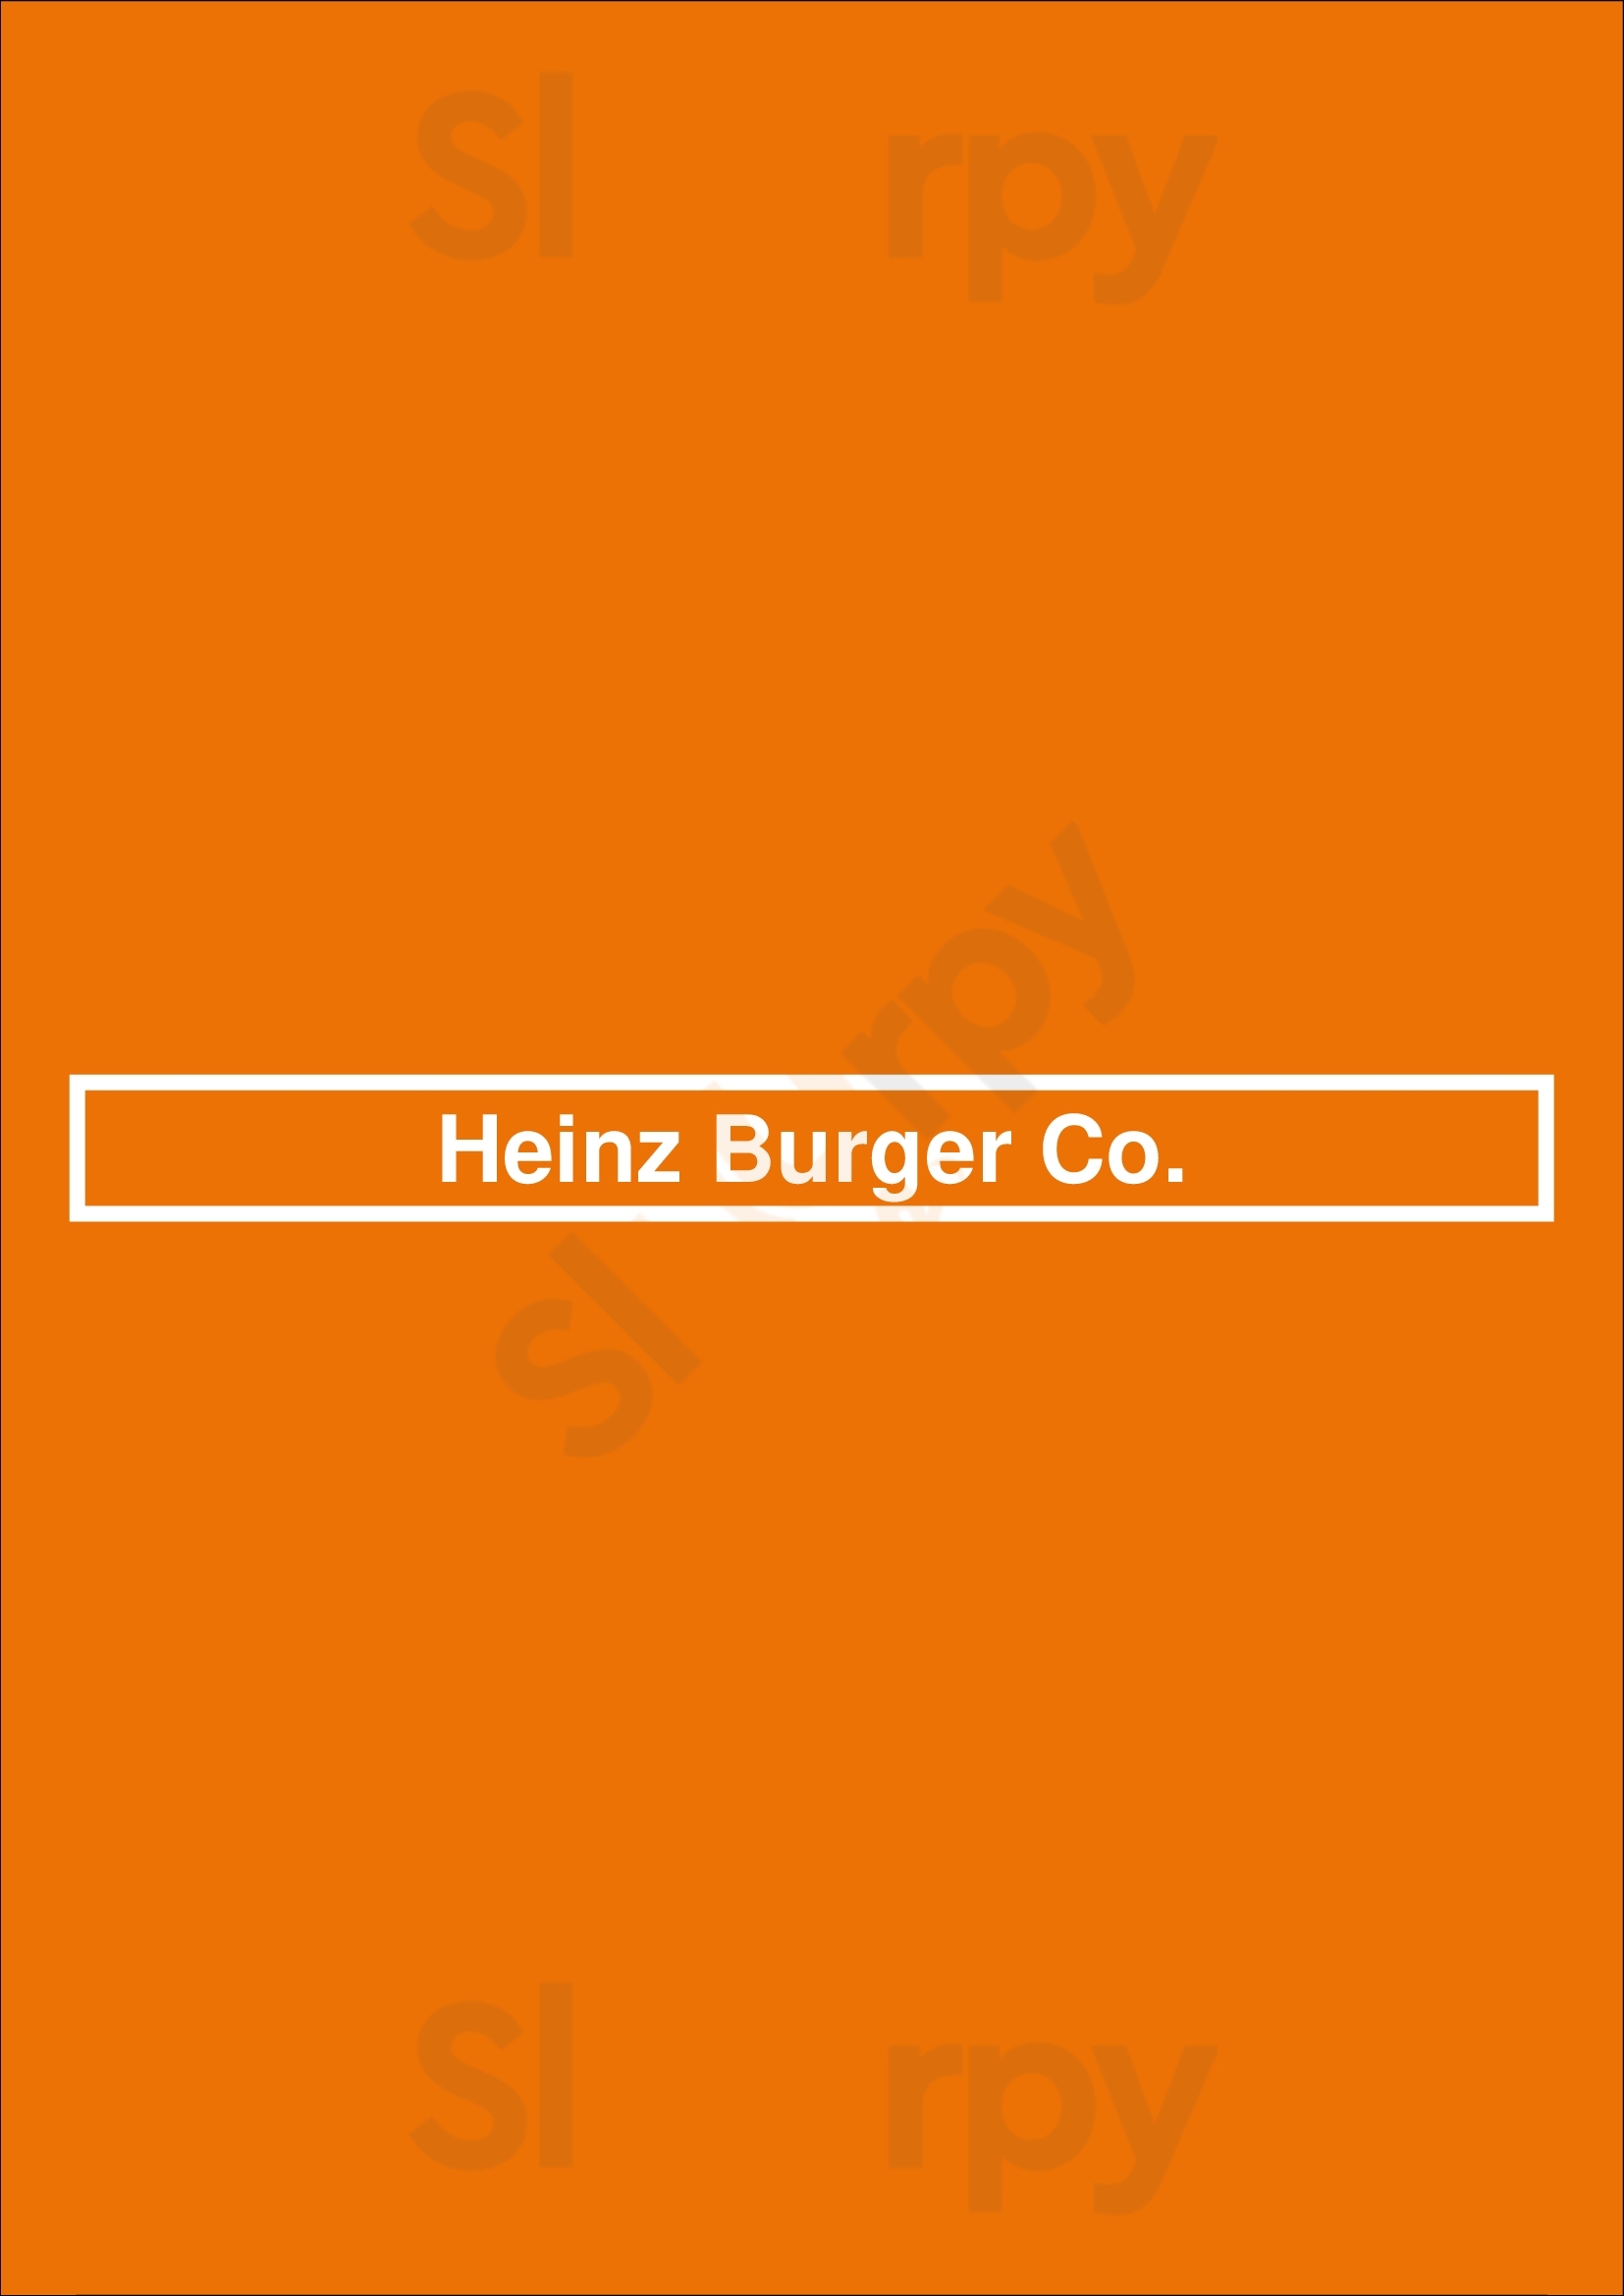 Heinz Burger Co. Barrie Menu - 1